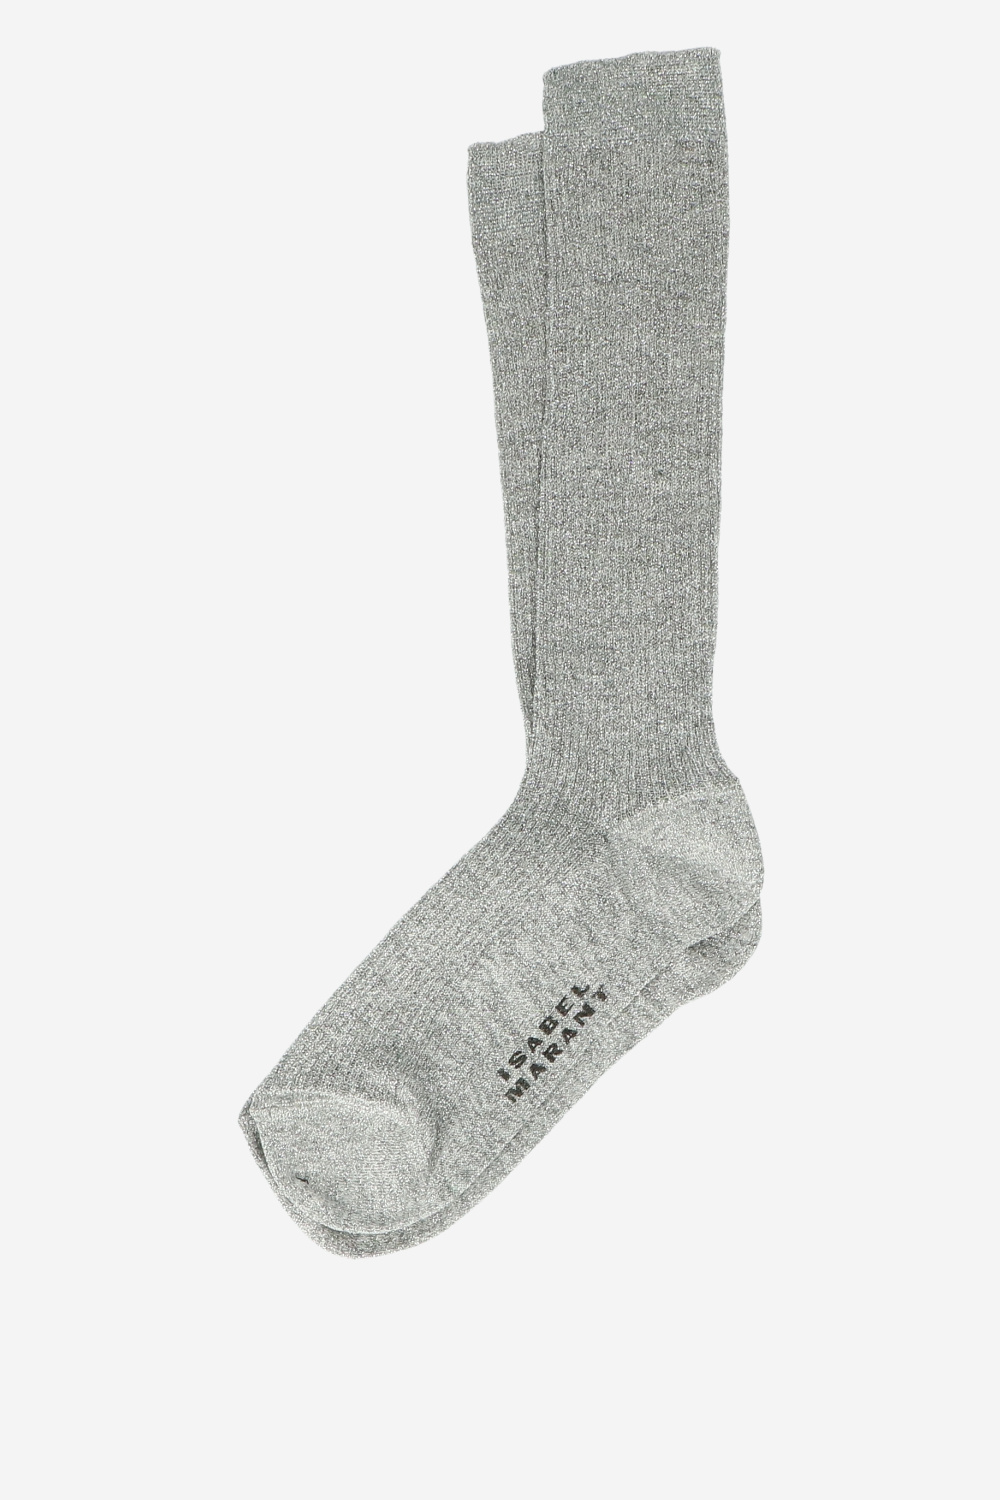 Isabel Marant Socks Silver